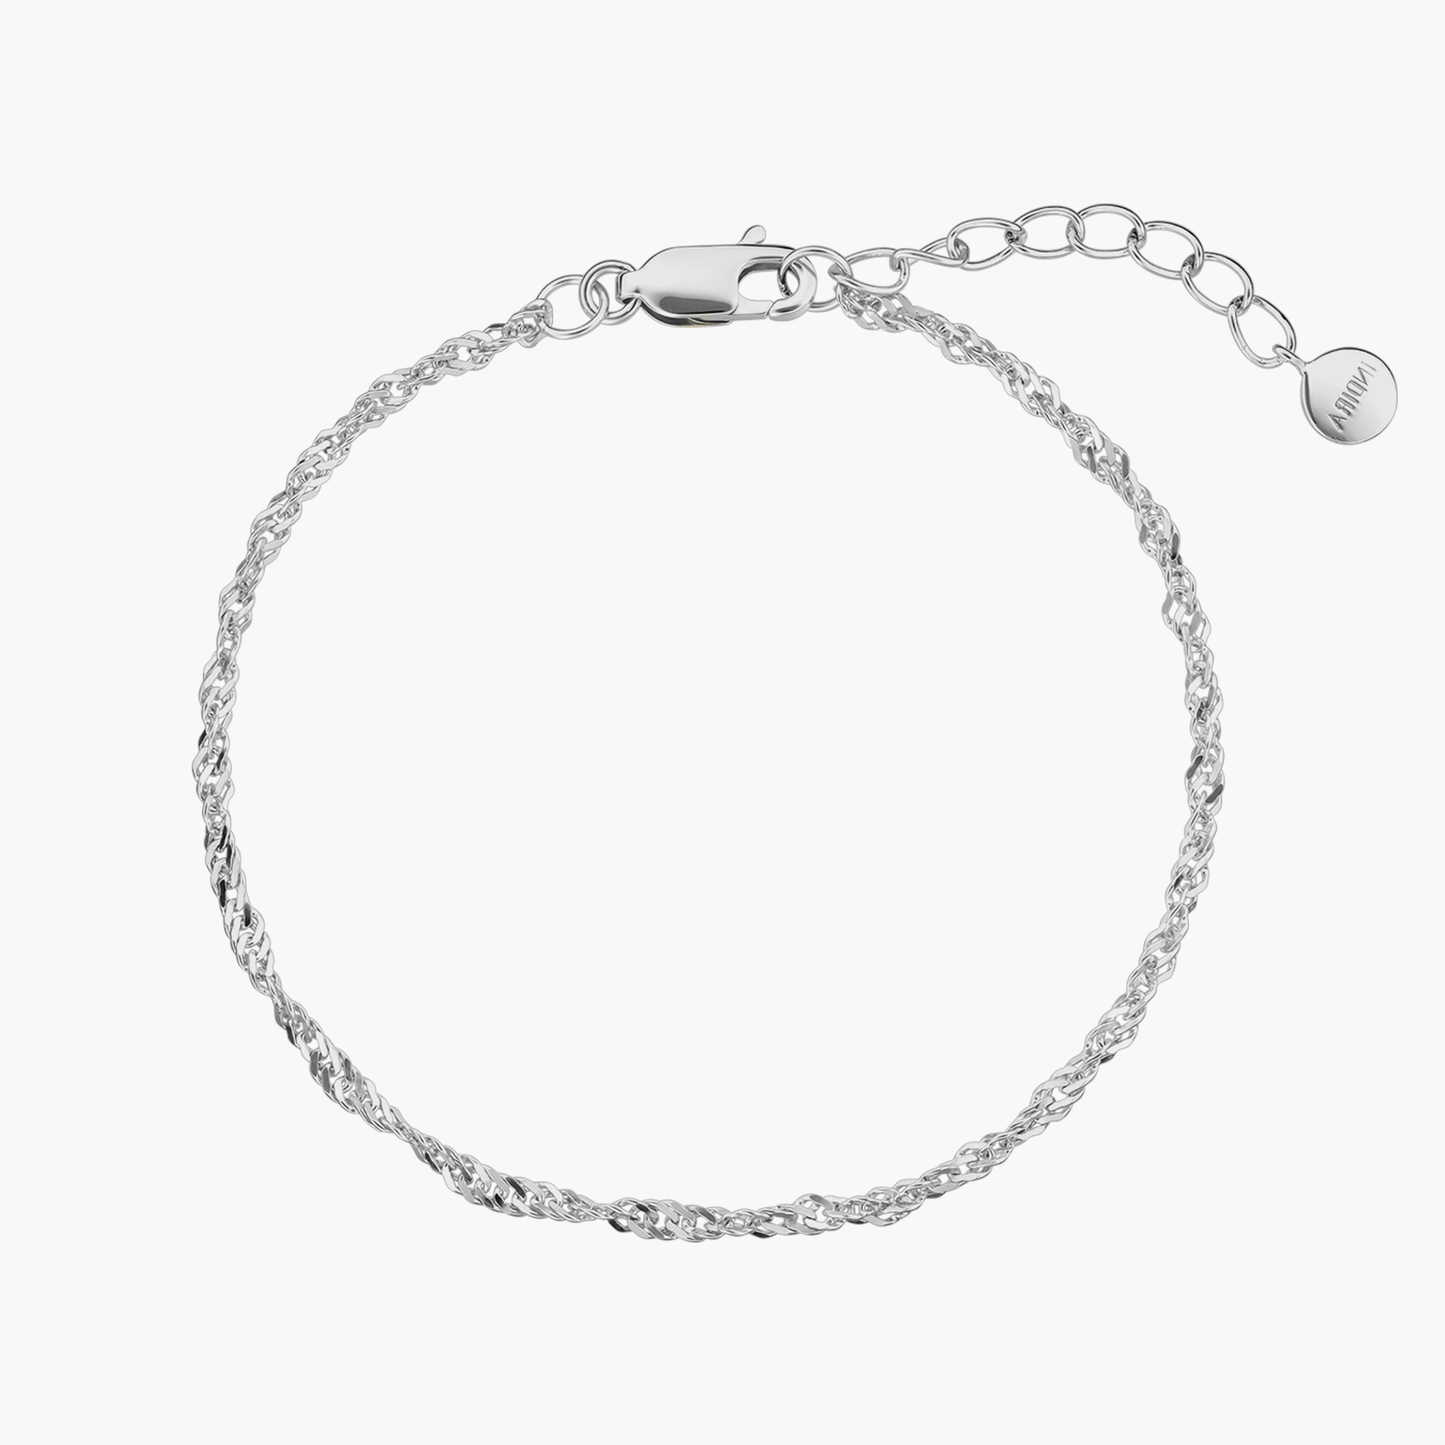 Singapore silver bracelet